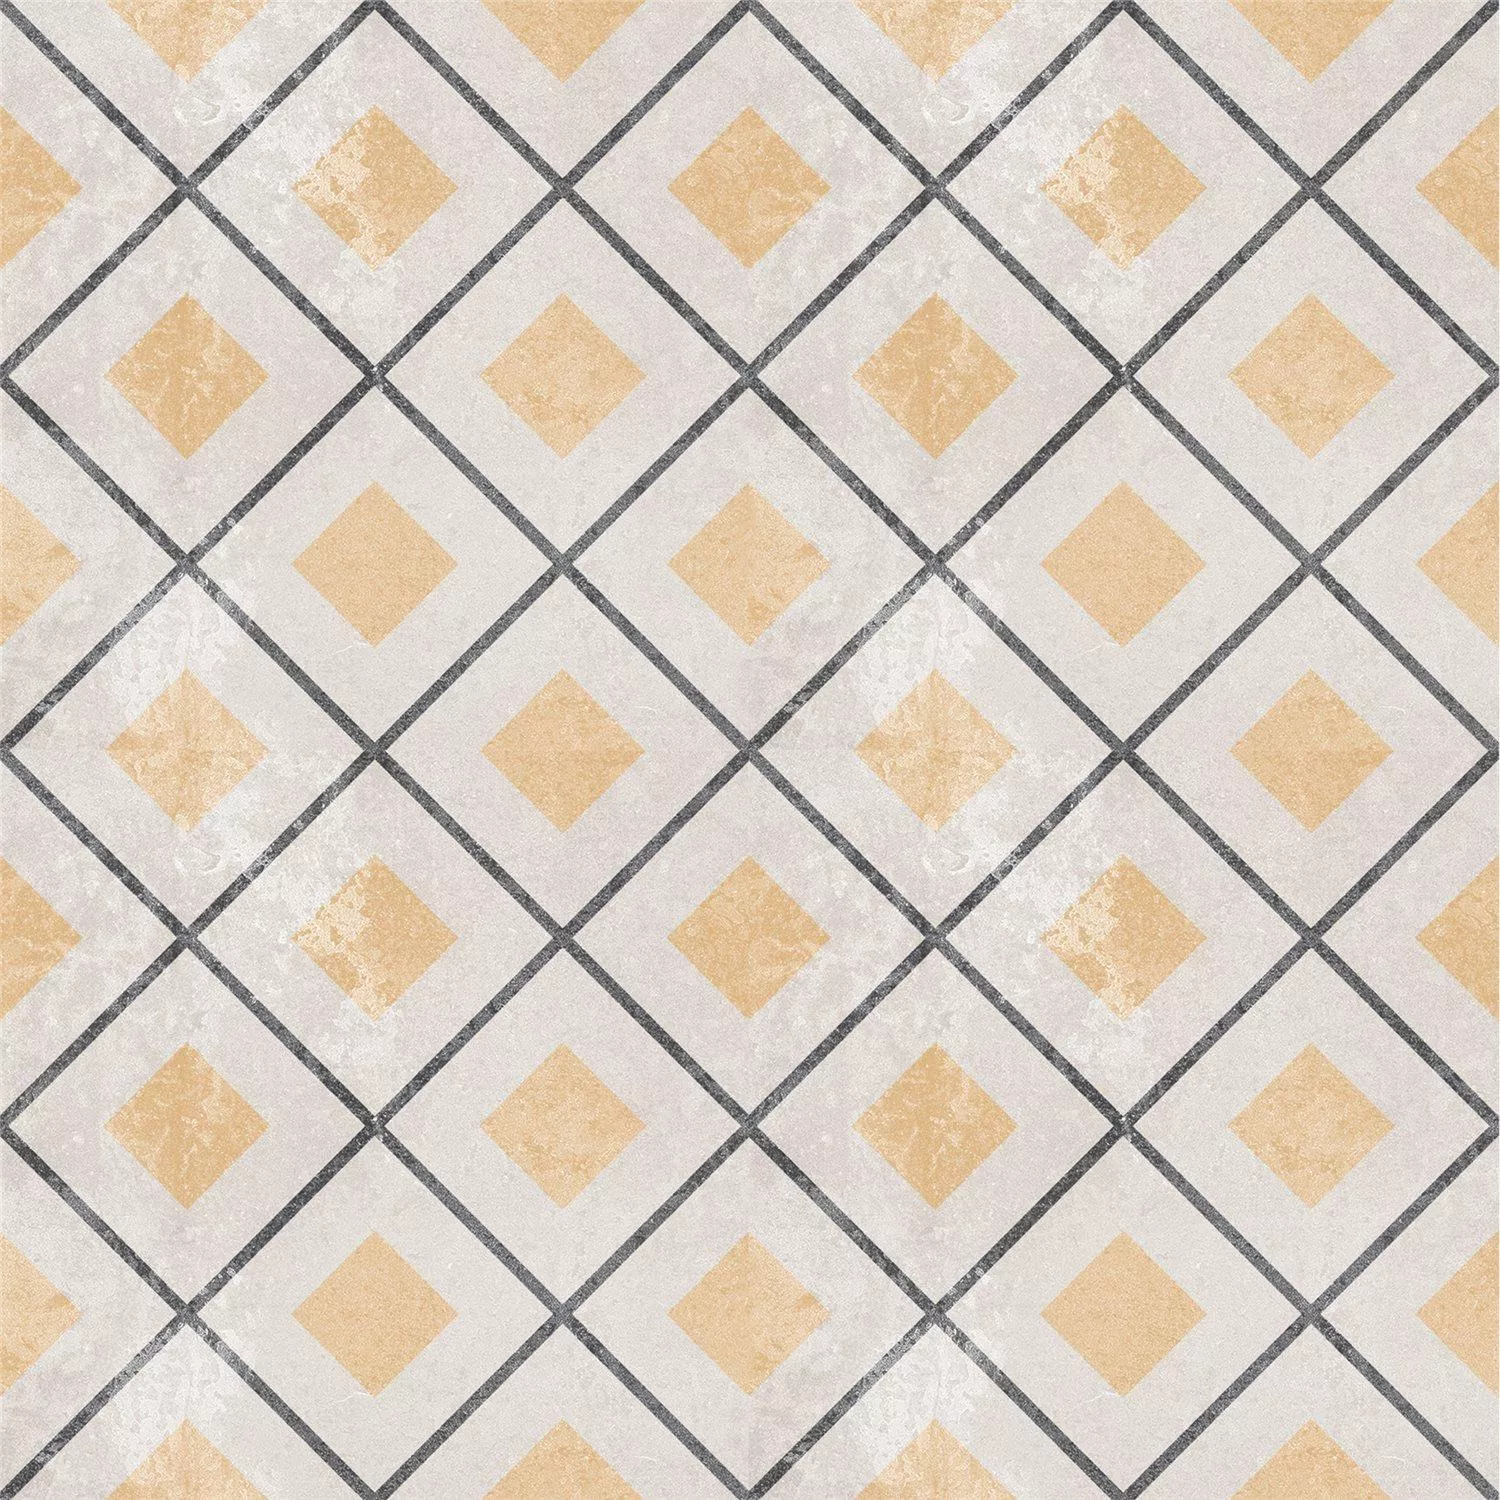 Cement Tiles Retro Optic Gris Floor Tiles Cubero 18,6x18,6cm